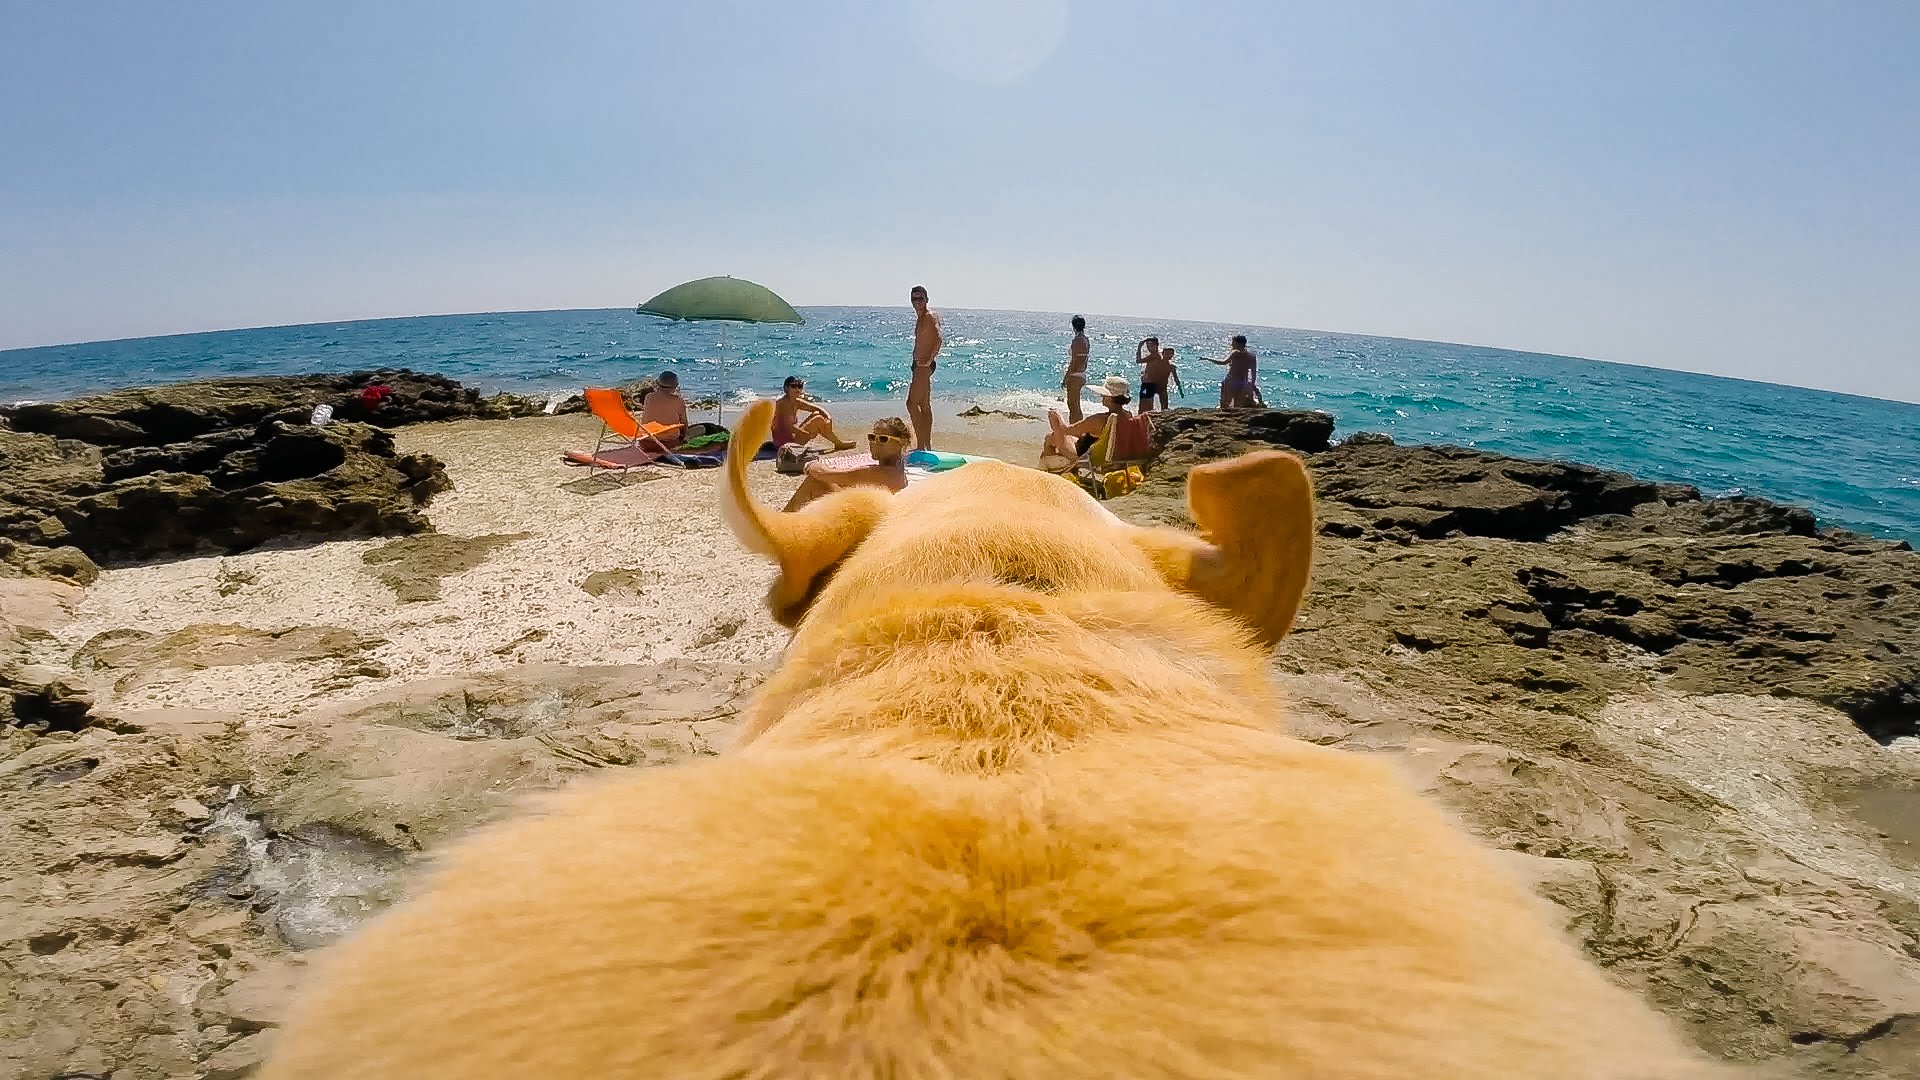 VIDEO: Laimīgā Valtera skrējiens uz pludmali! (It’s Always Sunny In Walter’s World)